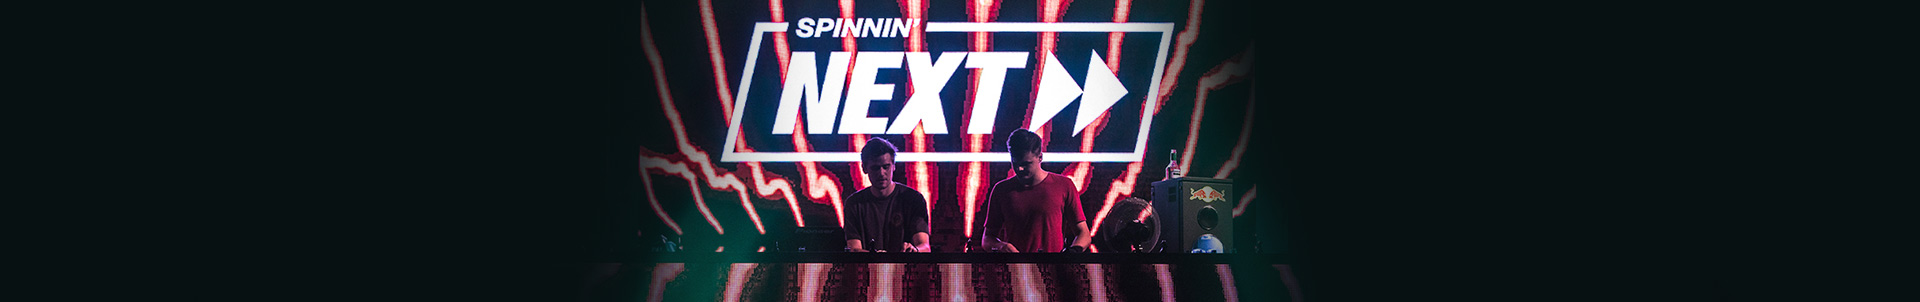 VIDEO: Watch Spinnin's NEXT DJs in action